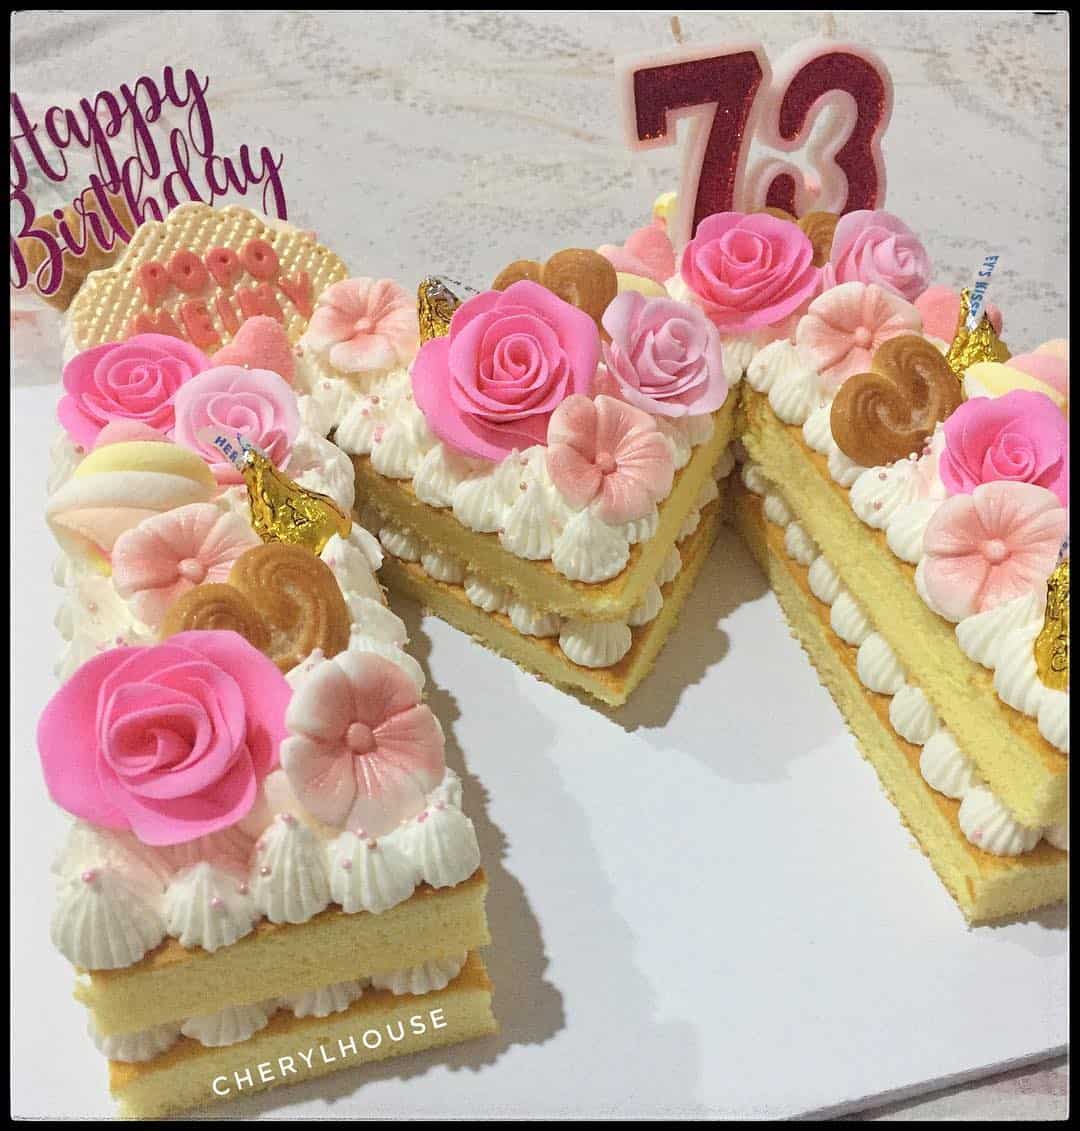 Birthday Cake for Grandmother